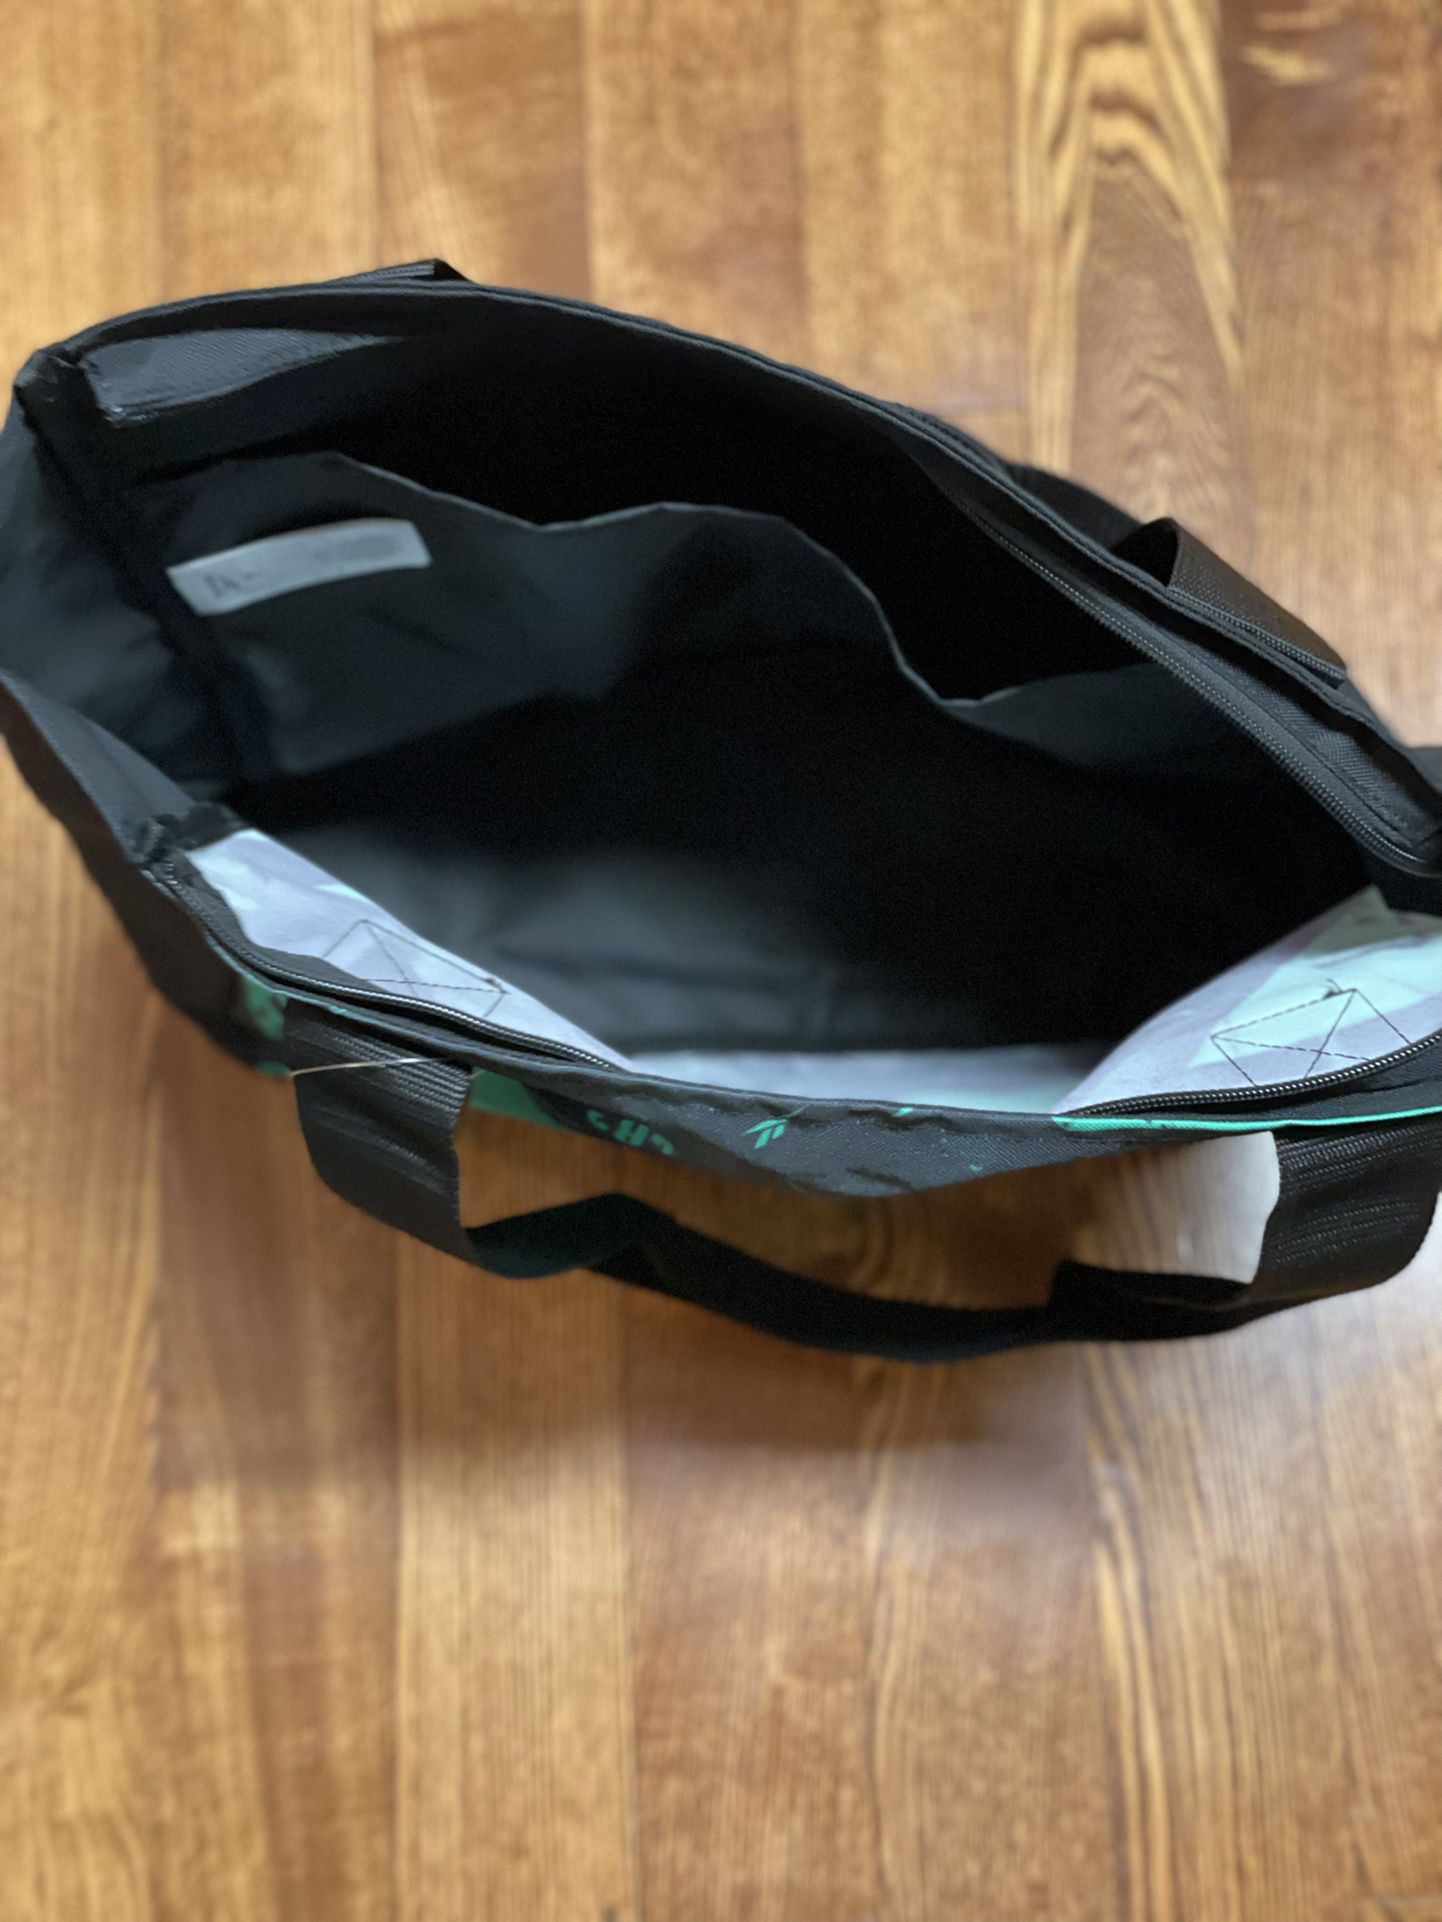 Brand New Reebok Tote Bag/purse With Zipper